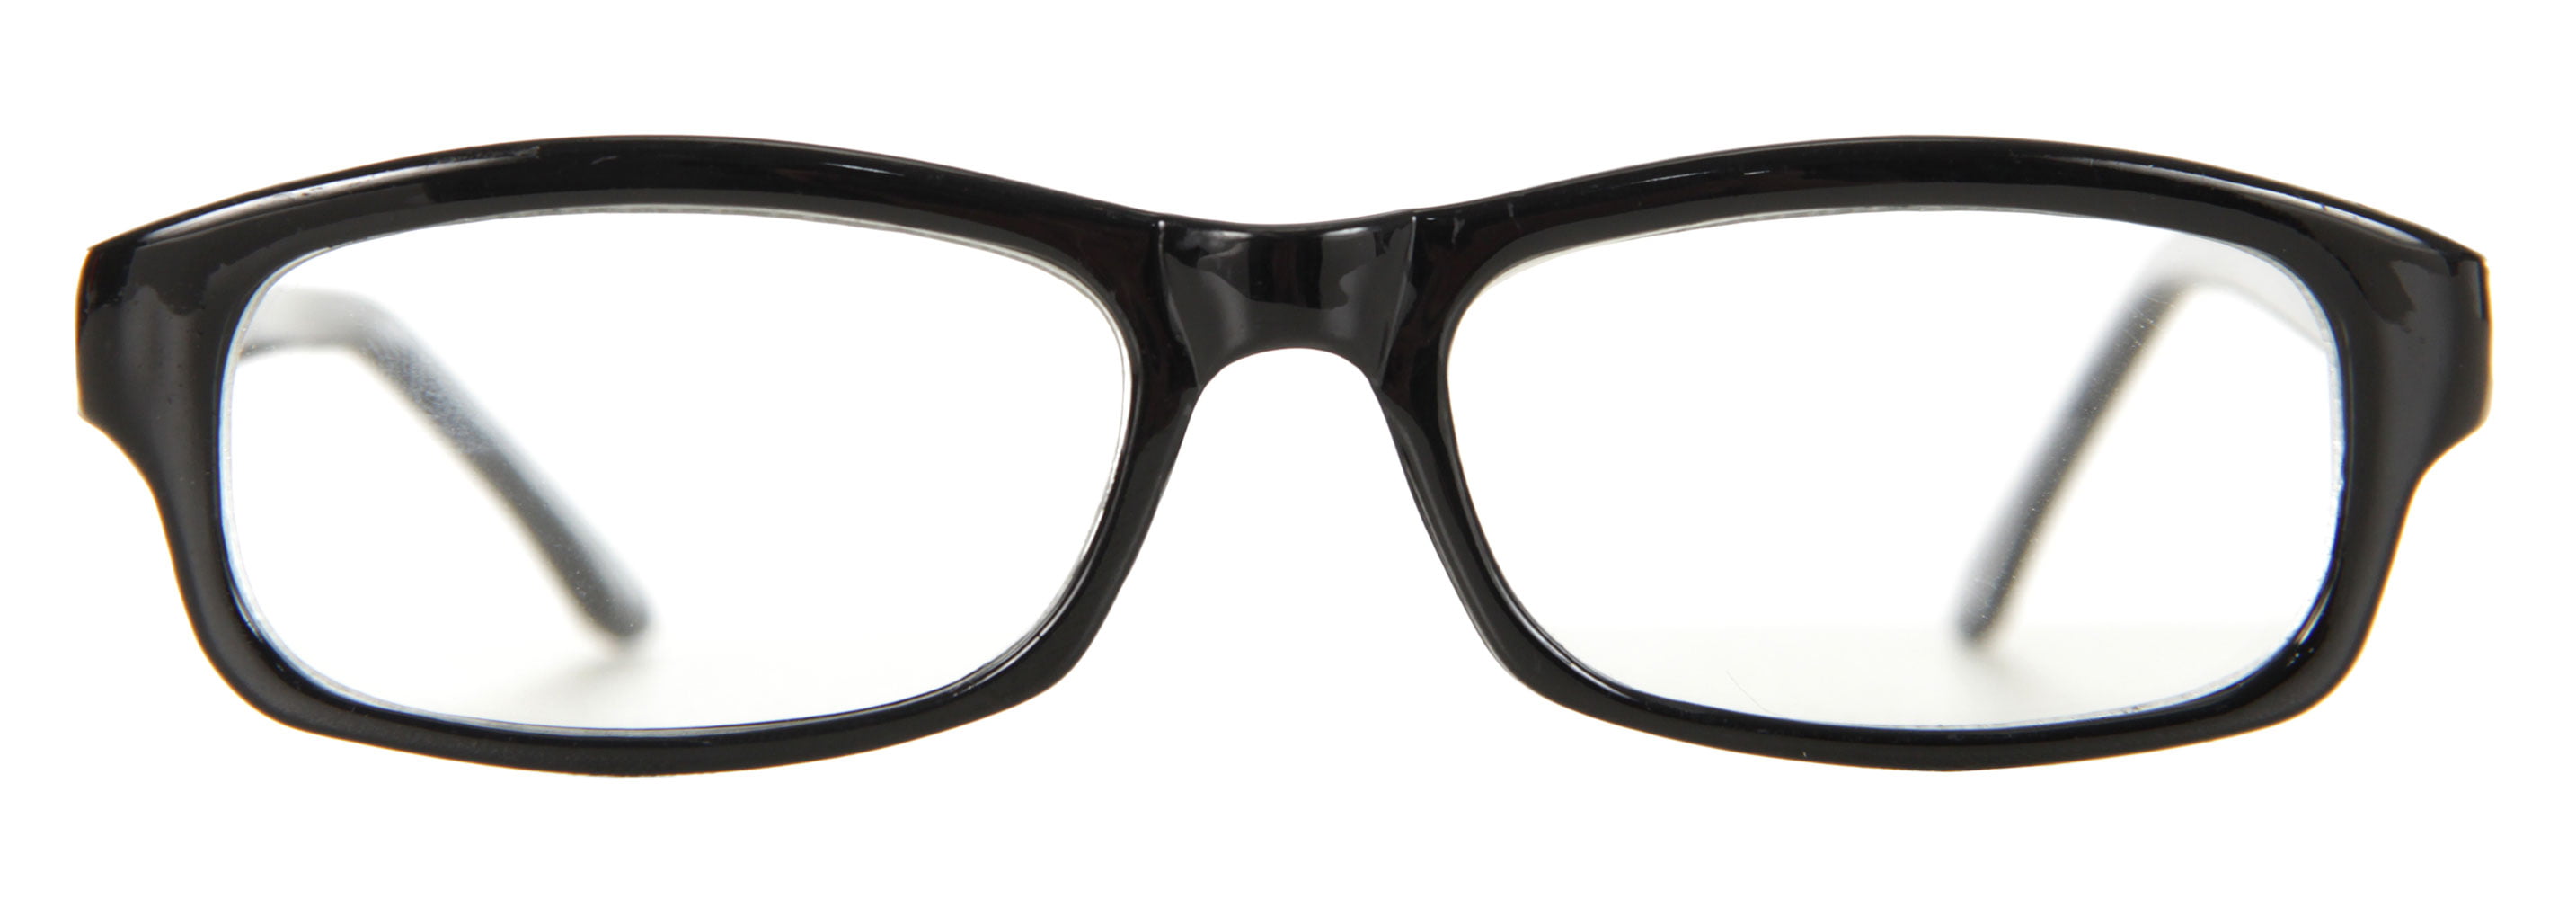 Nerd Glasses Frames Eyewear Style Clear Lens Classic Costumes Retro Fun 